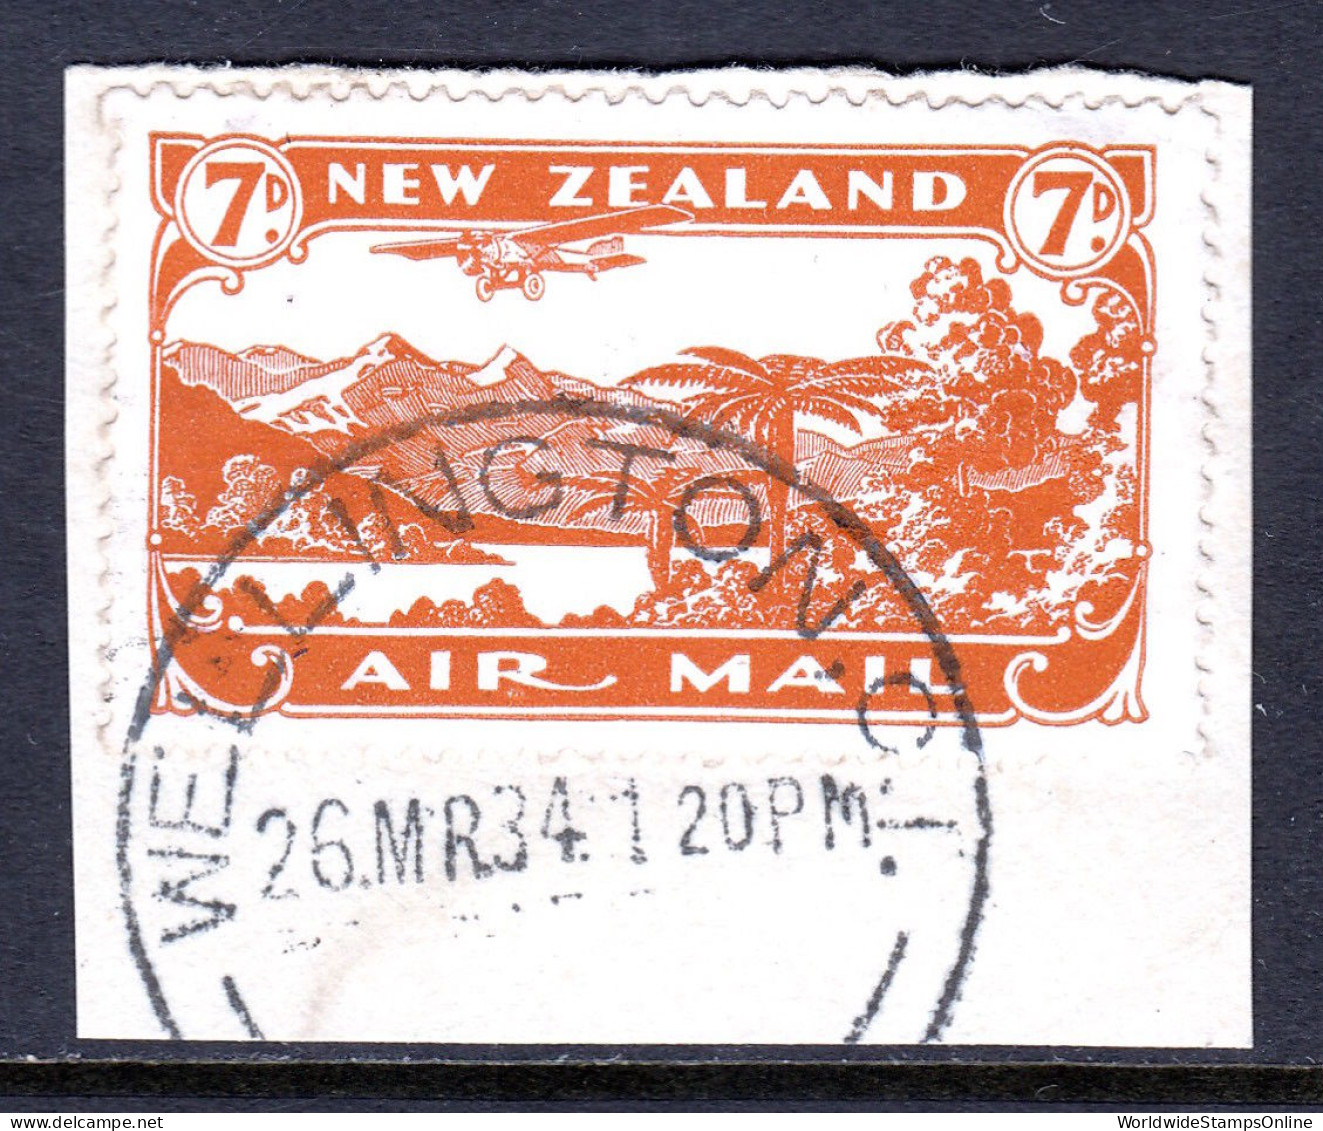 NEW ZEALAND — SCOTT C3 (SG 550) — 1931 7d AIRMAIL — USED ON PIECE — SCV $27.50 - Posta Aerea